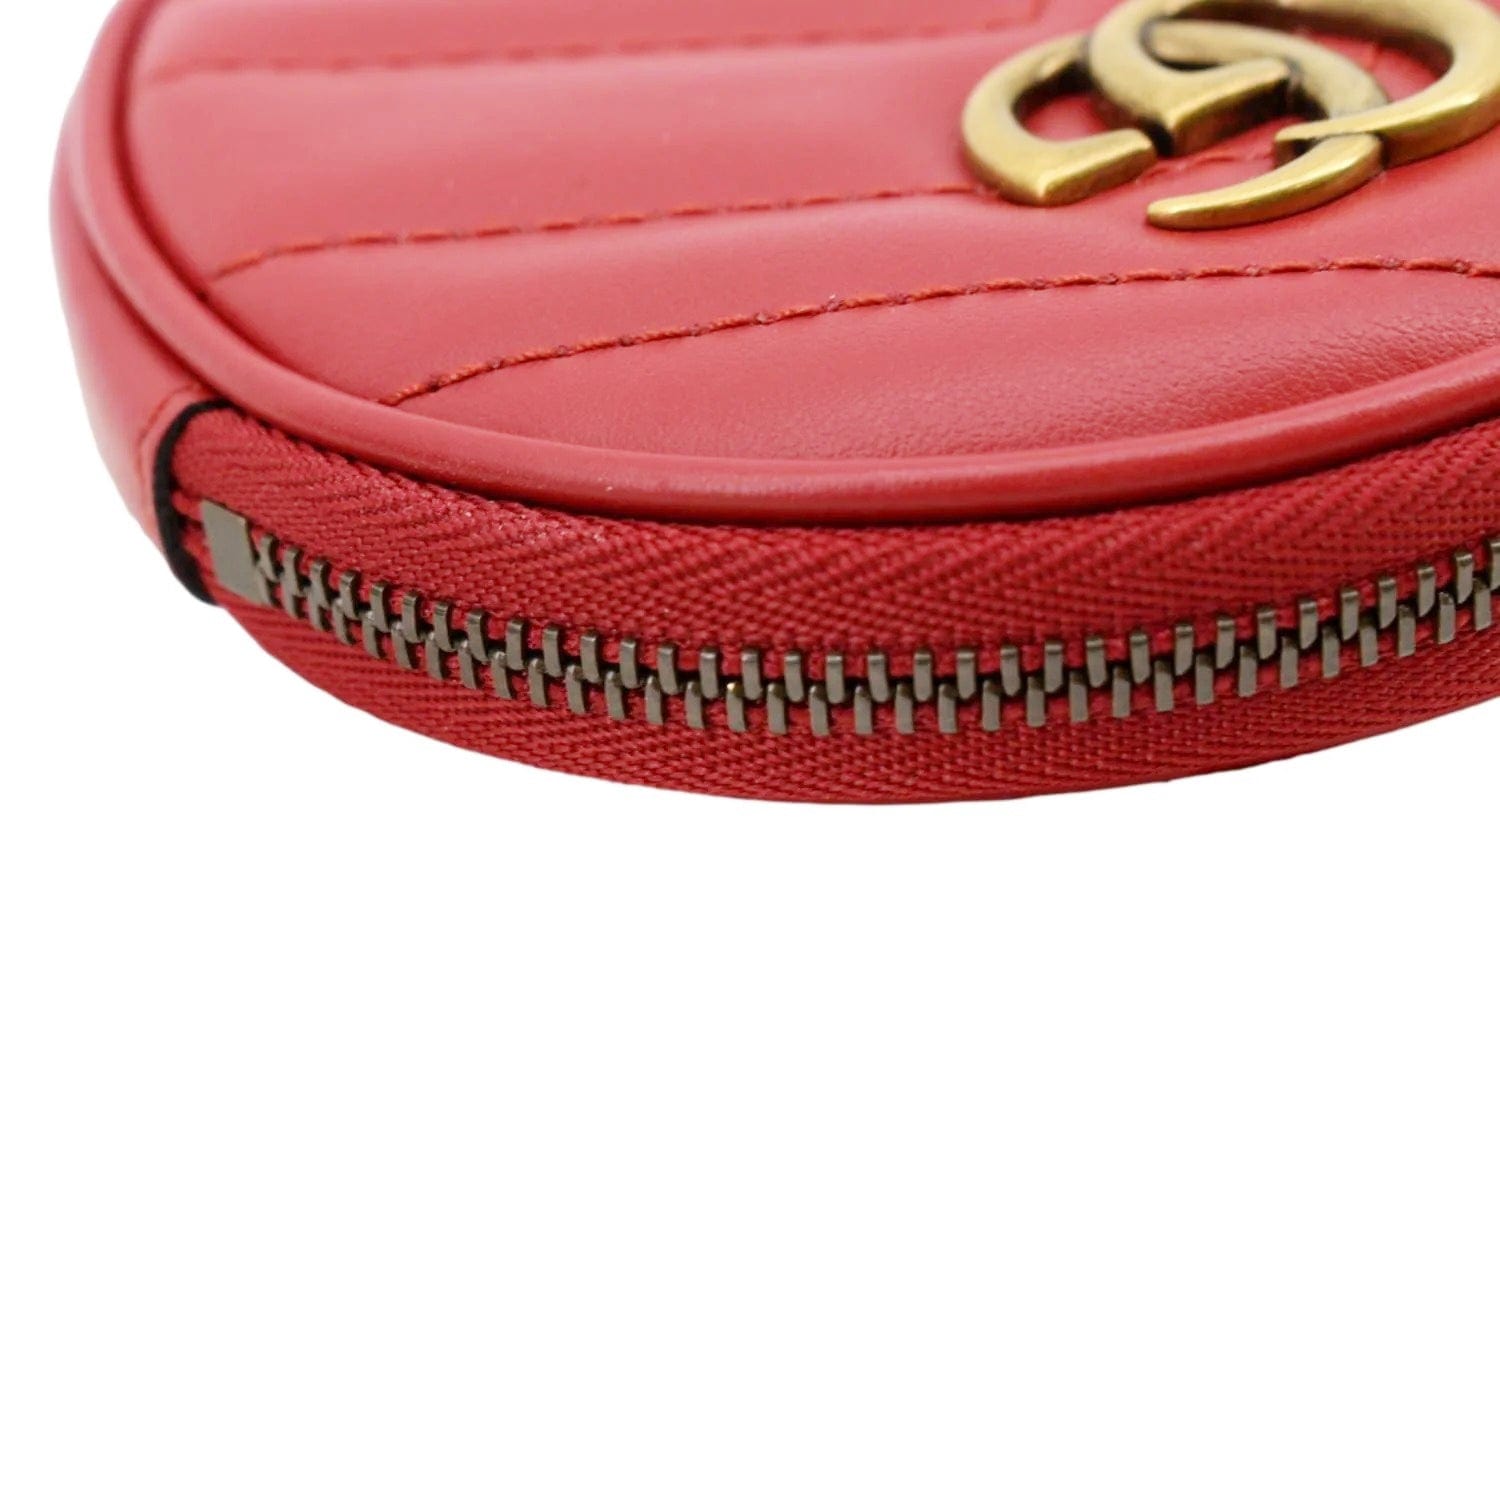 Gucci GG Marmont Mini phone pouch bag